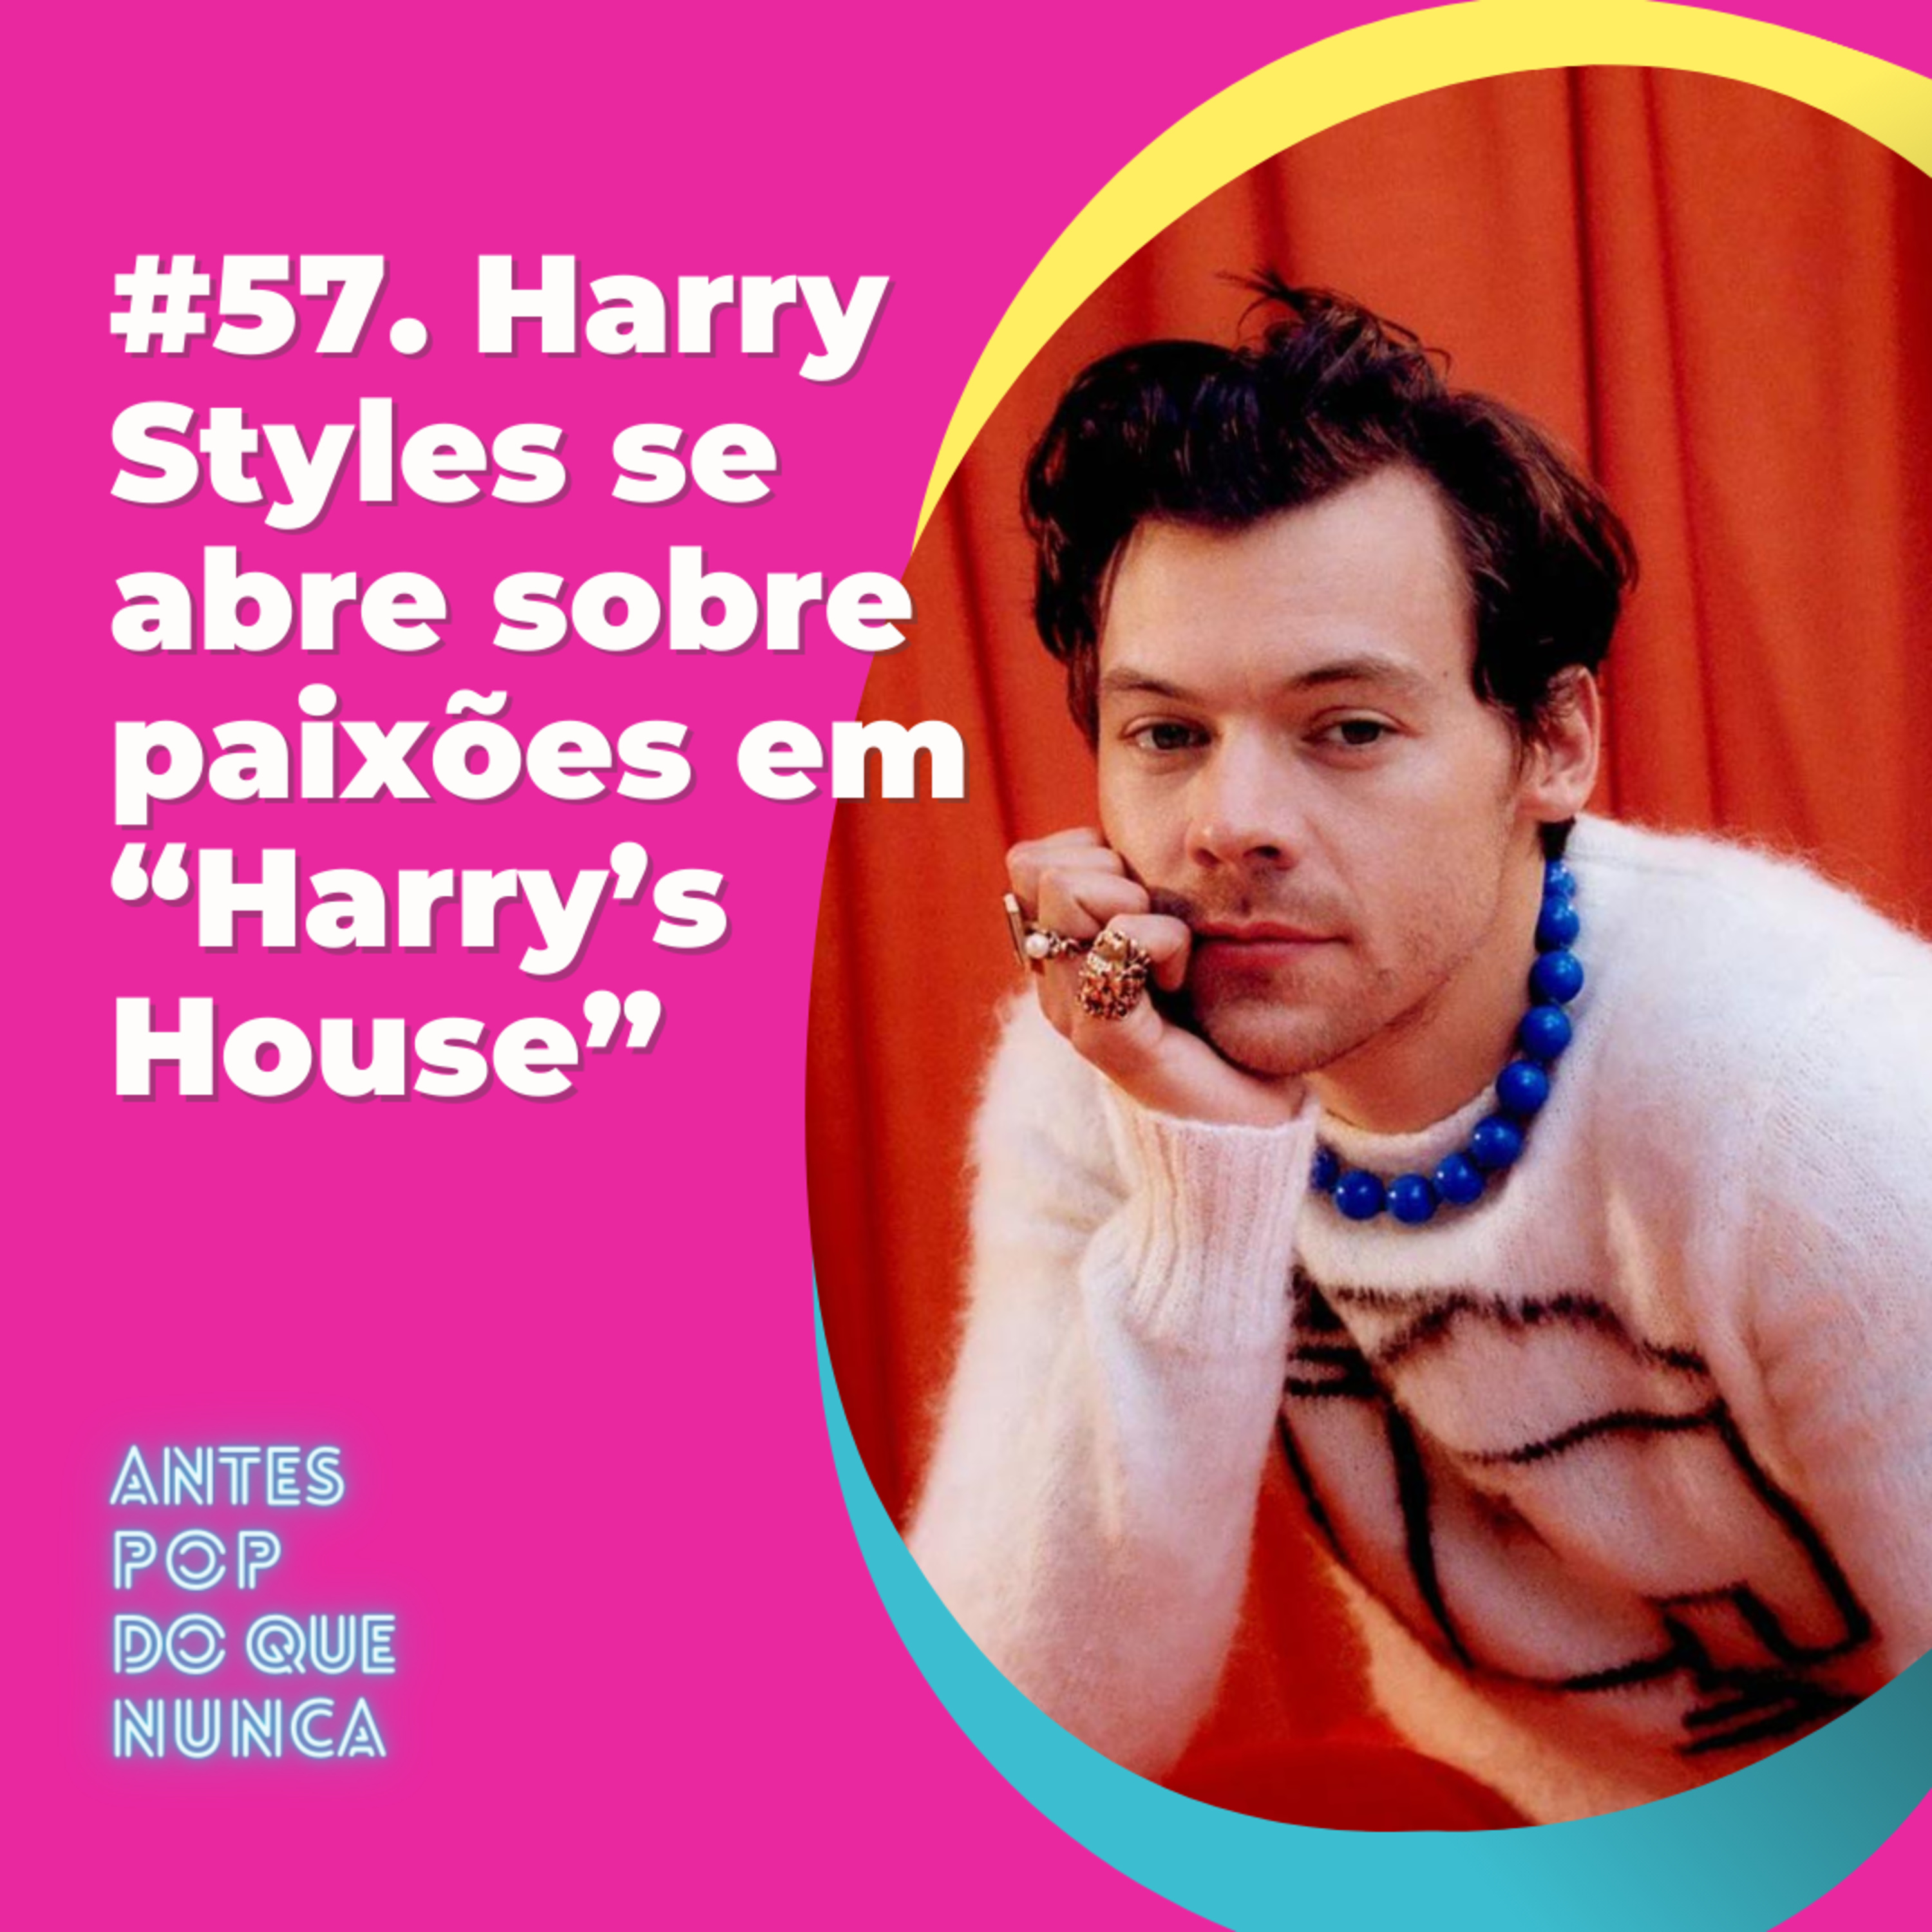 #57. Harry Styles se abre sobre paixões em “Harry’s House”